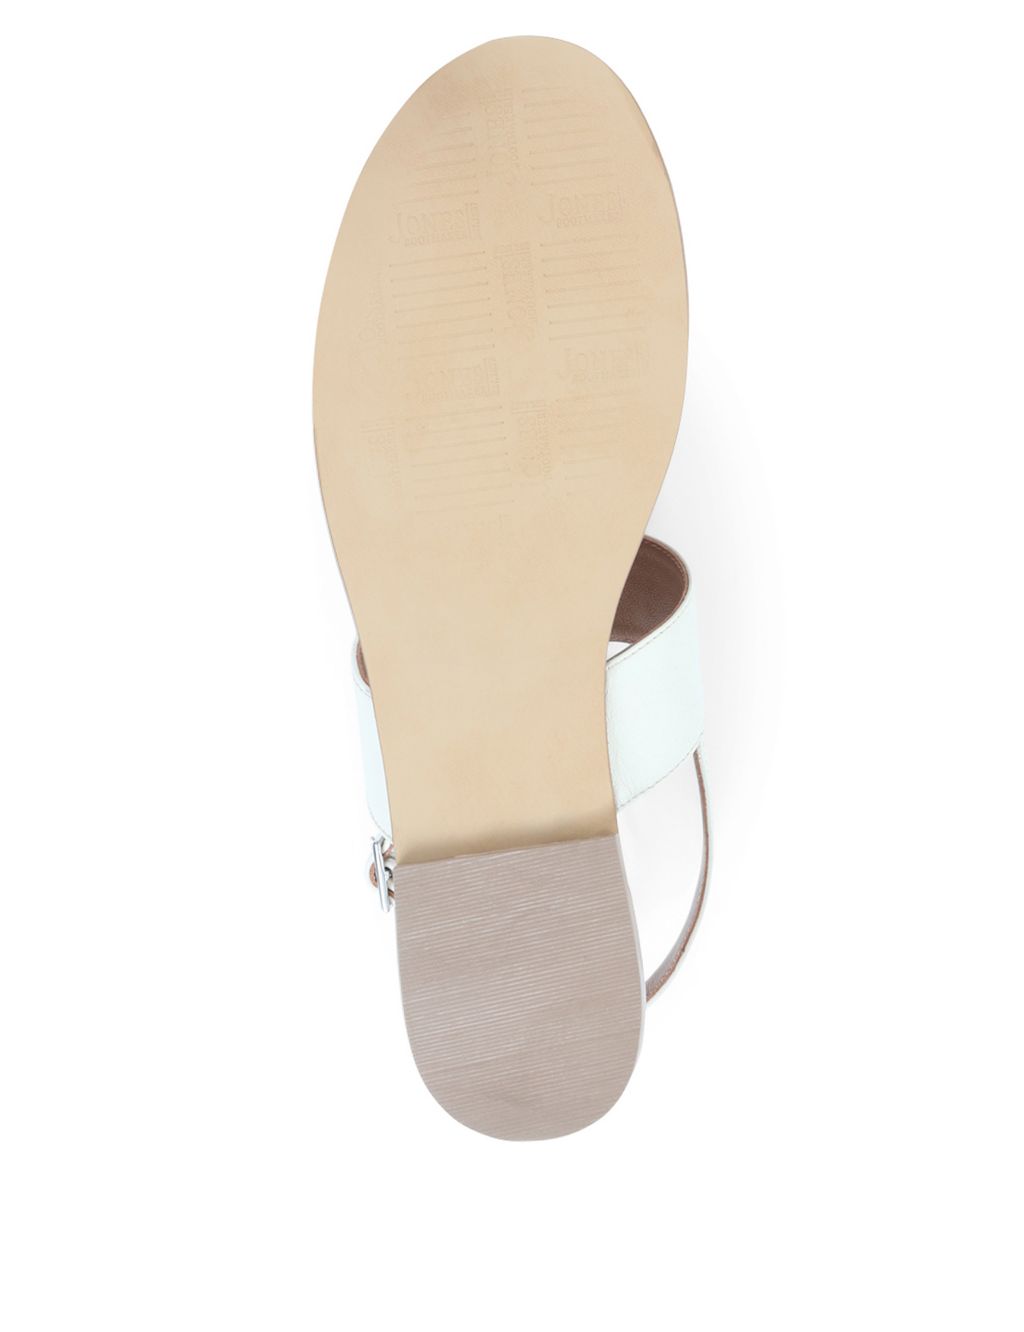 Leather Tassel Toe Thong Sandals image 6